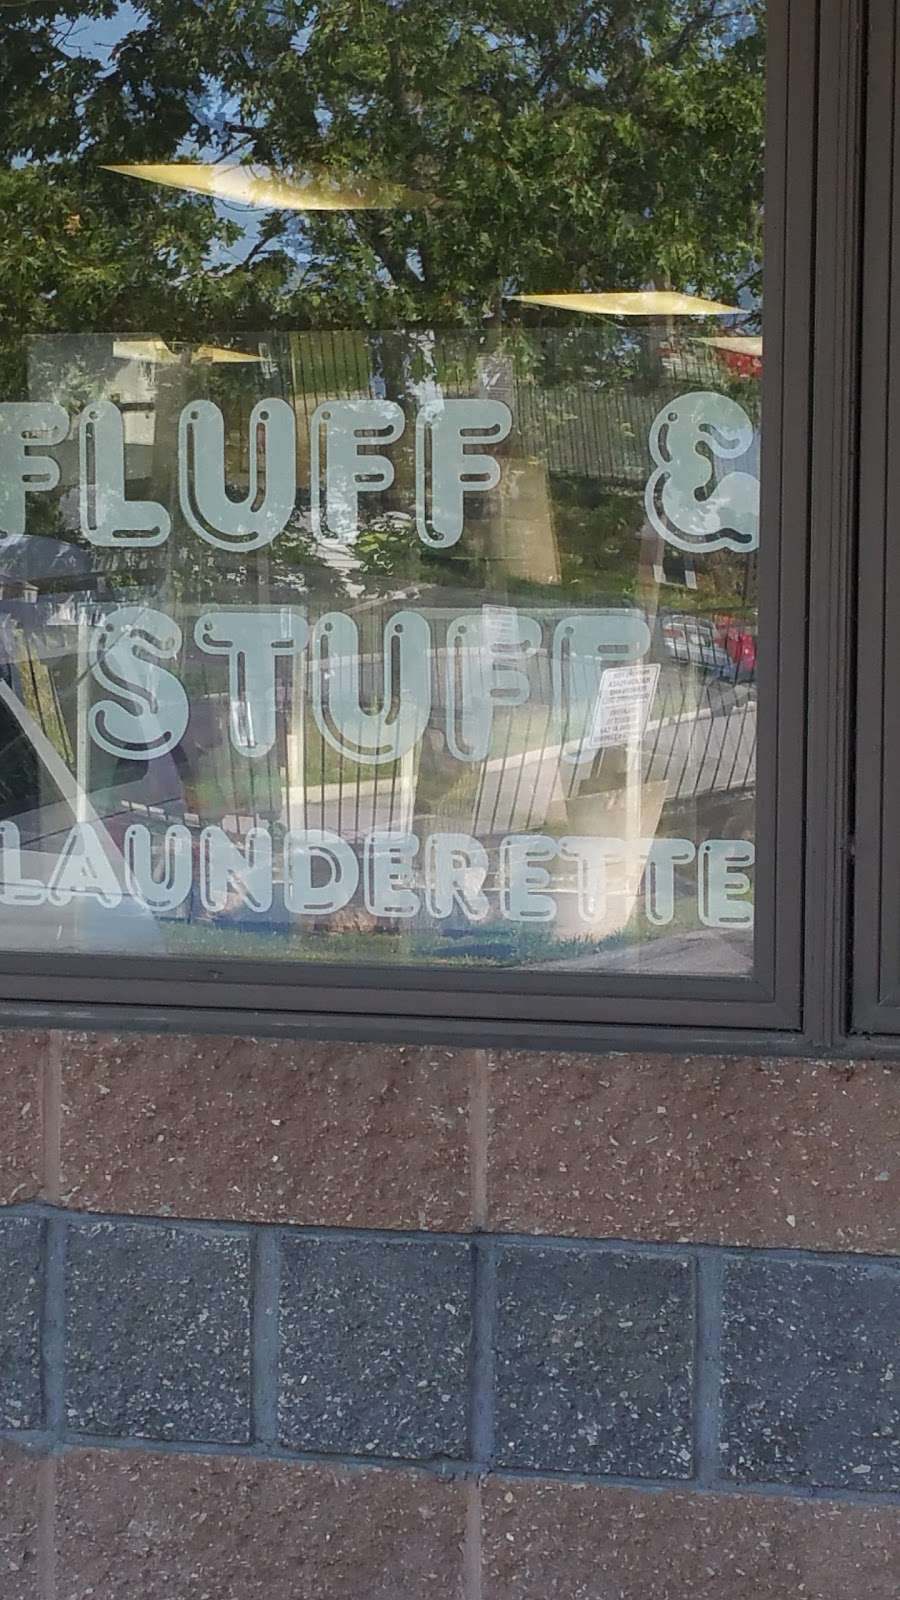 Fluff & Stuff Launderette | Linden St, Bethlehem, PA 18017, USA